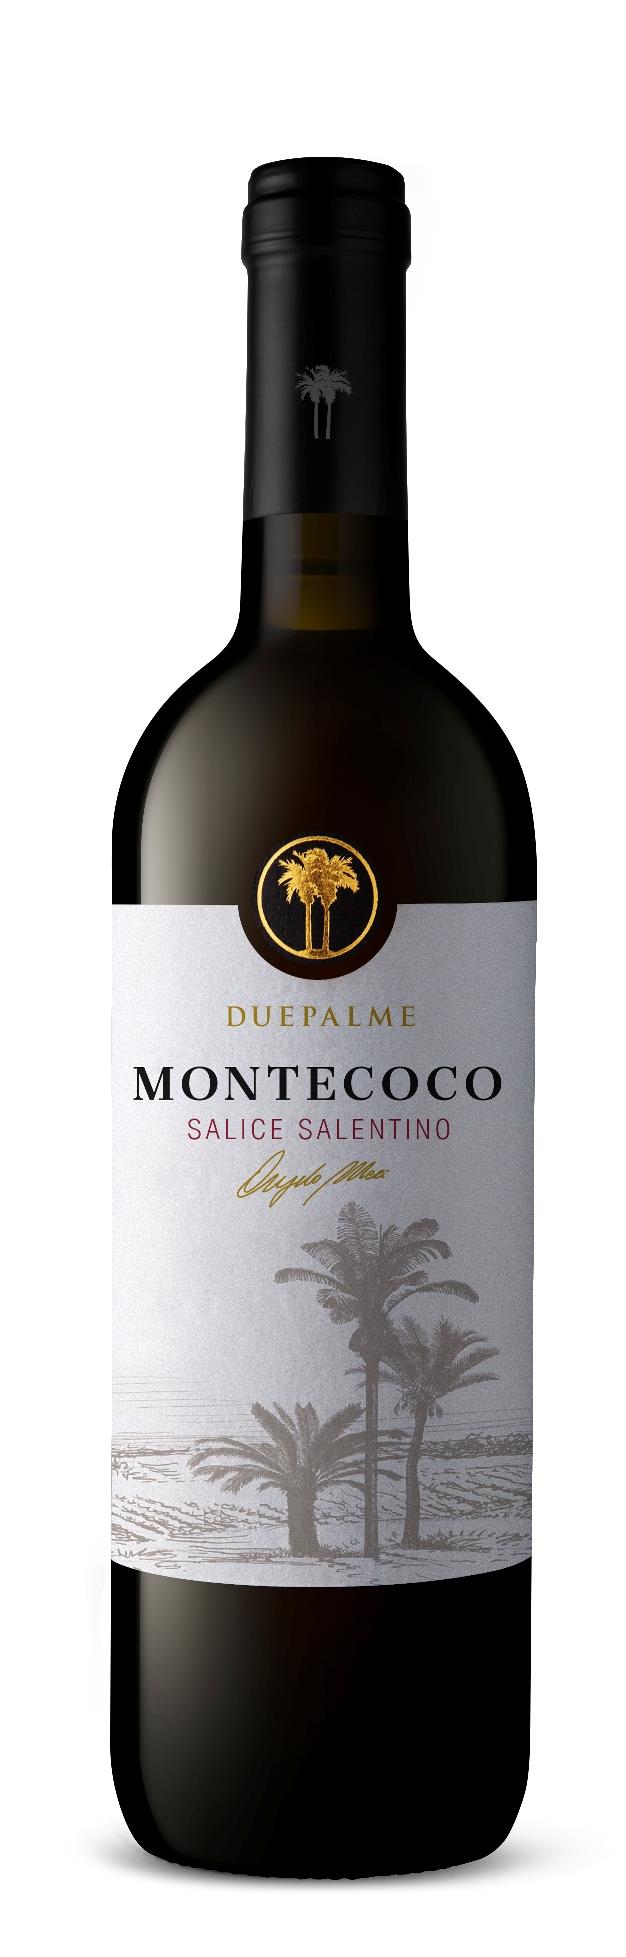 Cantine Due Palme 2015 Salice Salentino "Montecoco" DOC Magnum